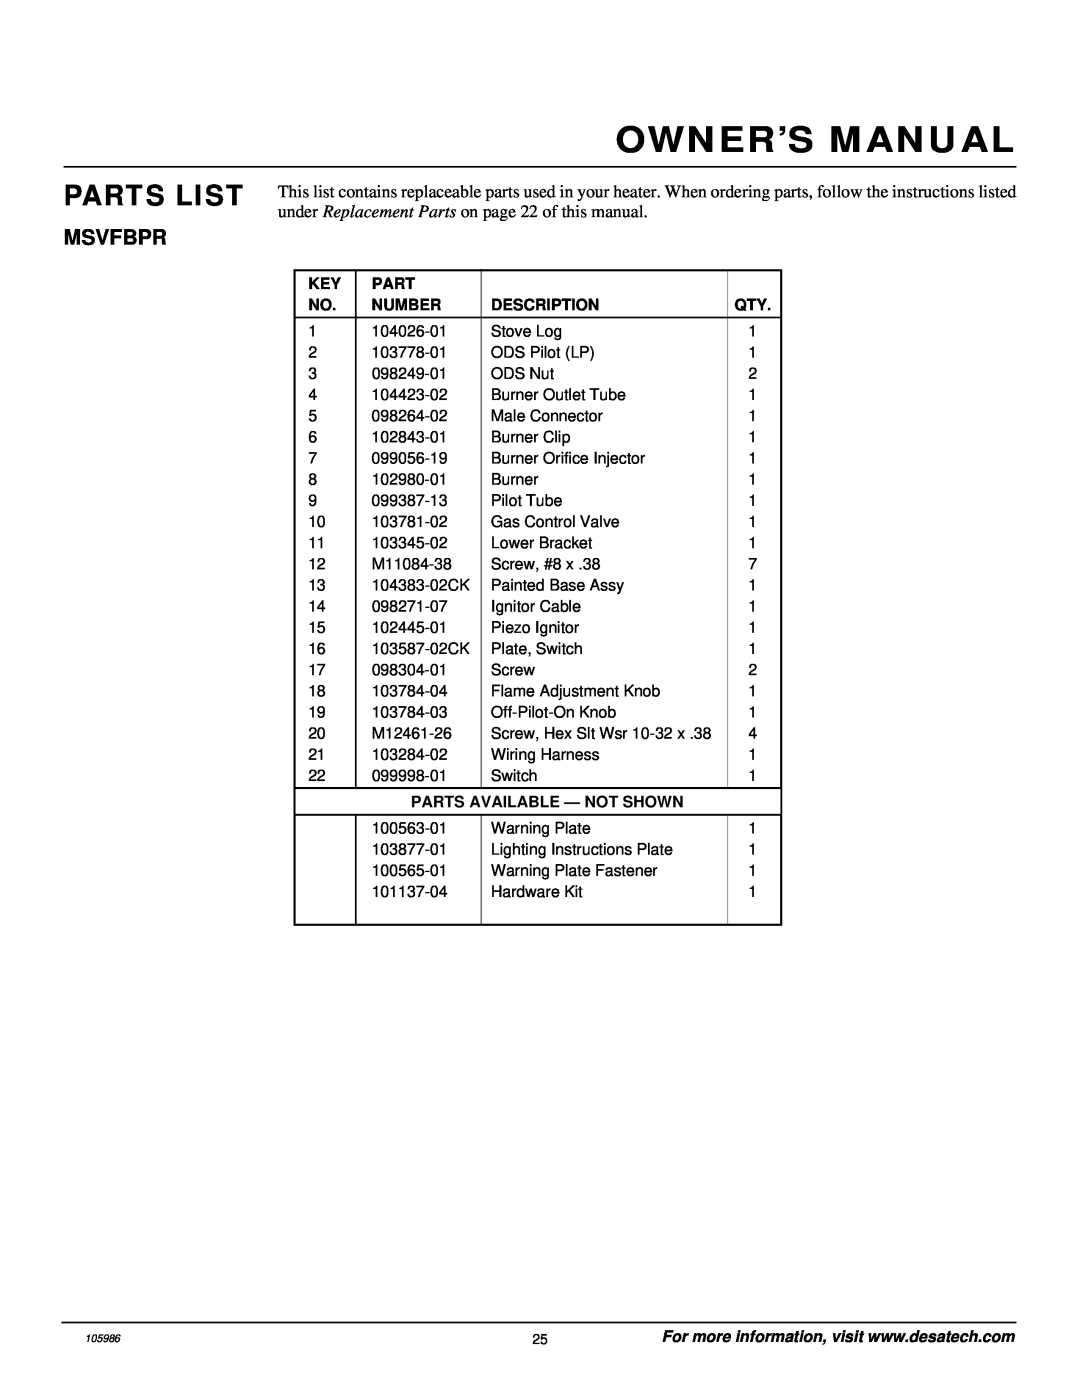 Desa MSVFBP installation manual Parts List, Msvfbpr, Number, Description, Parts Available - Not Shown 